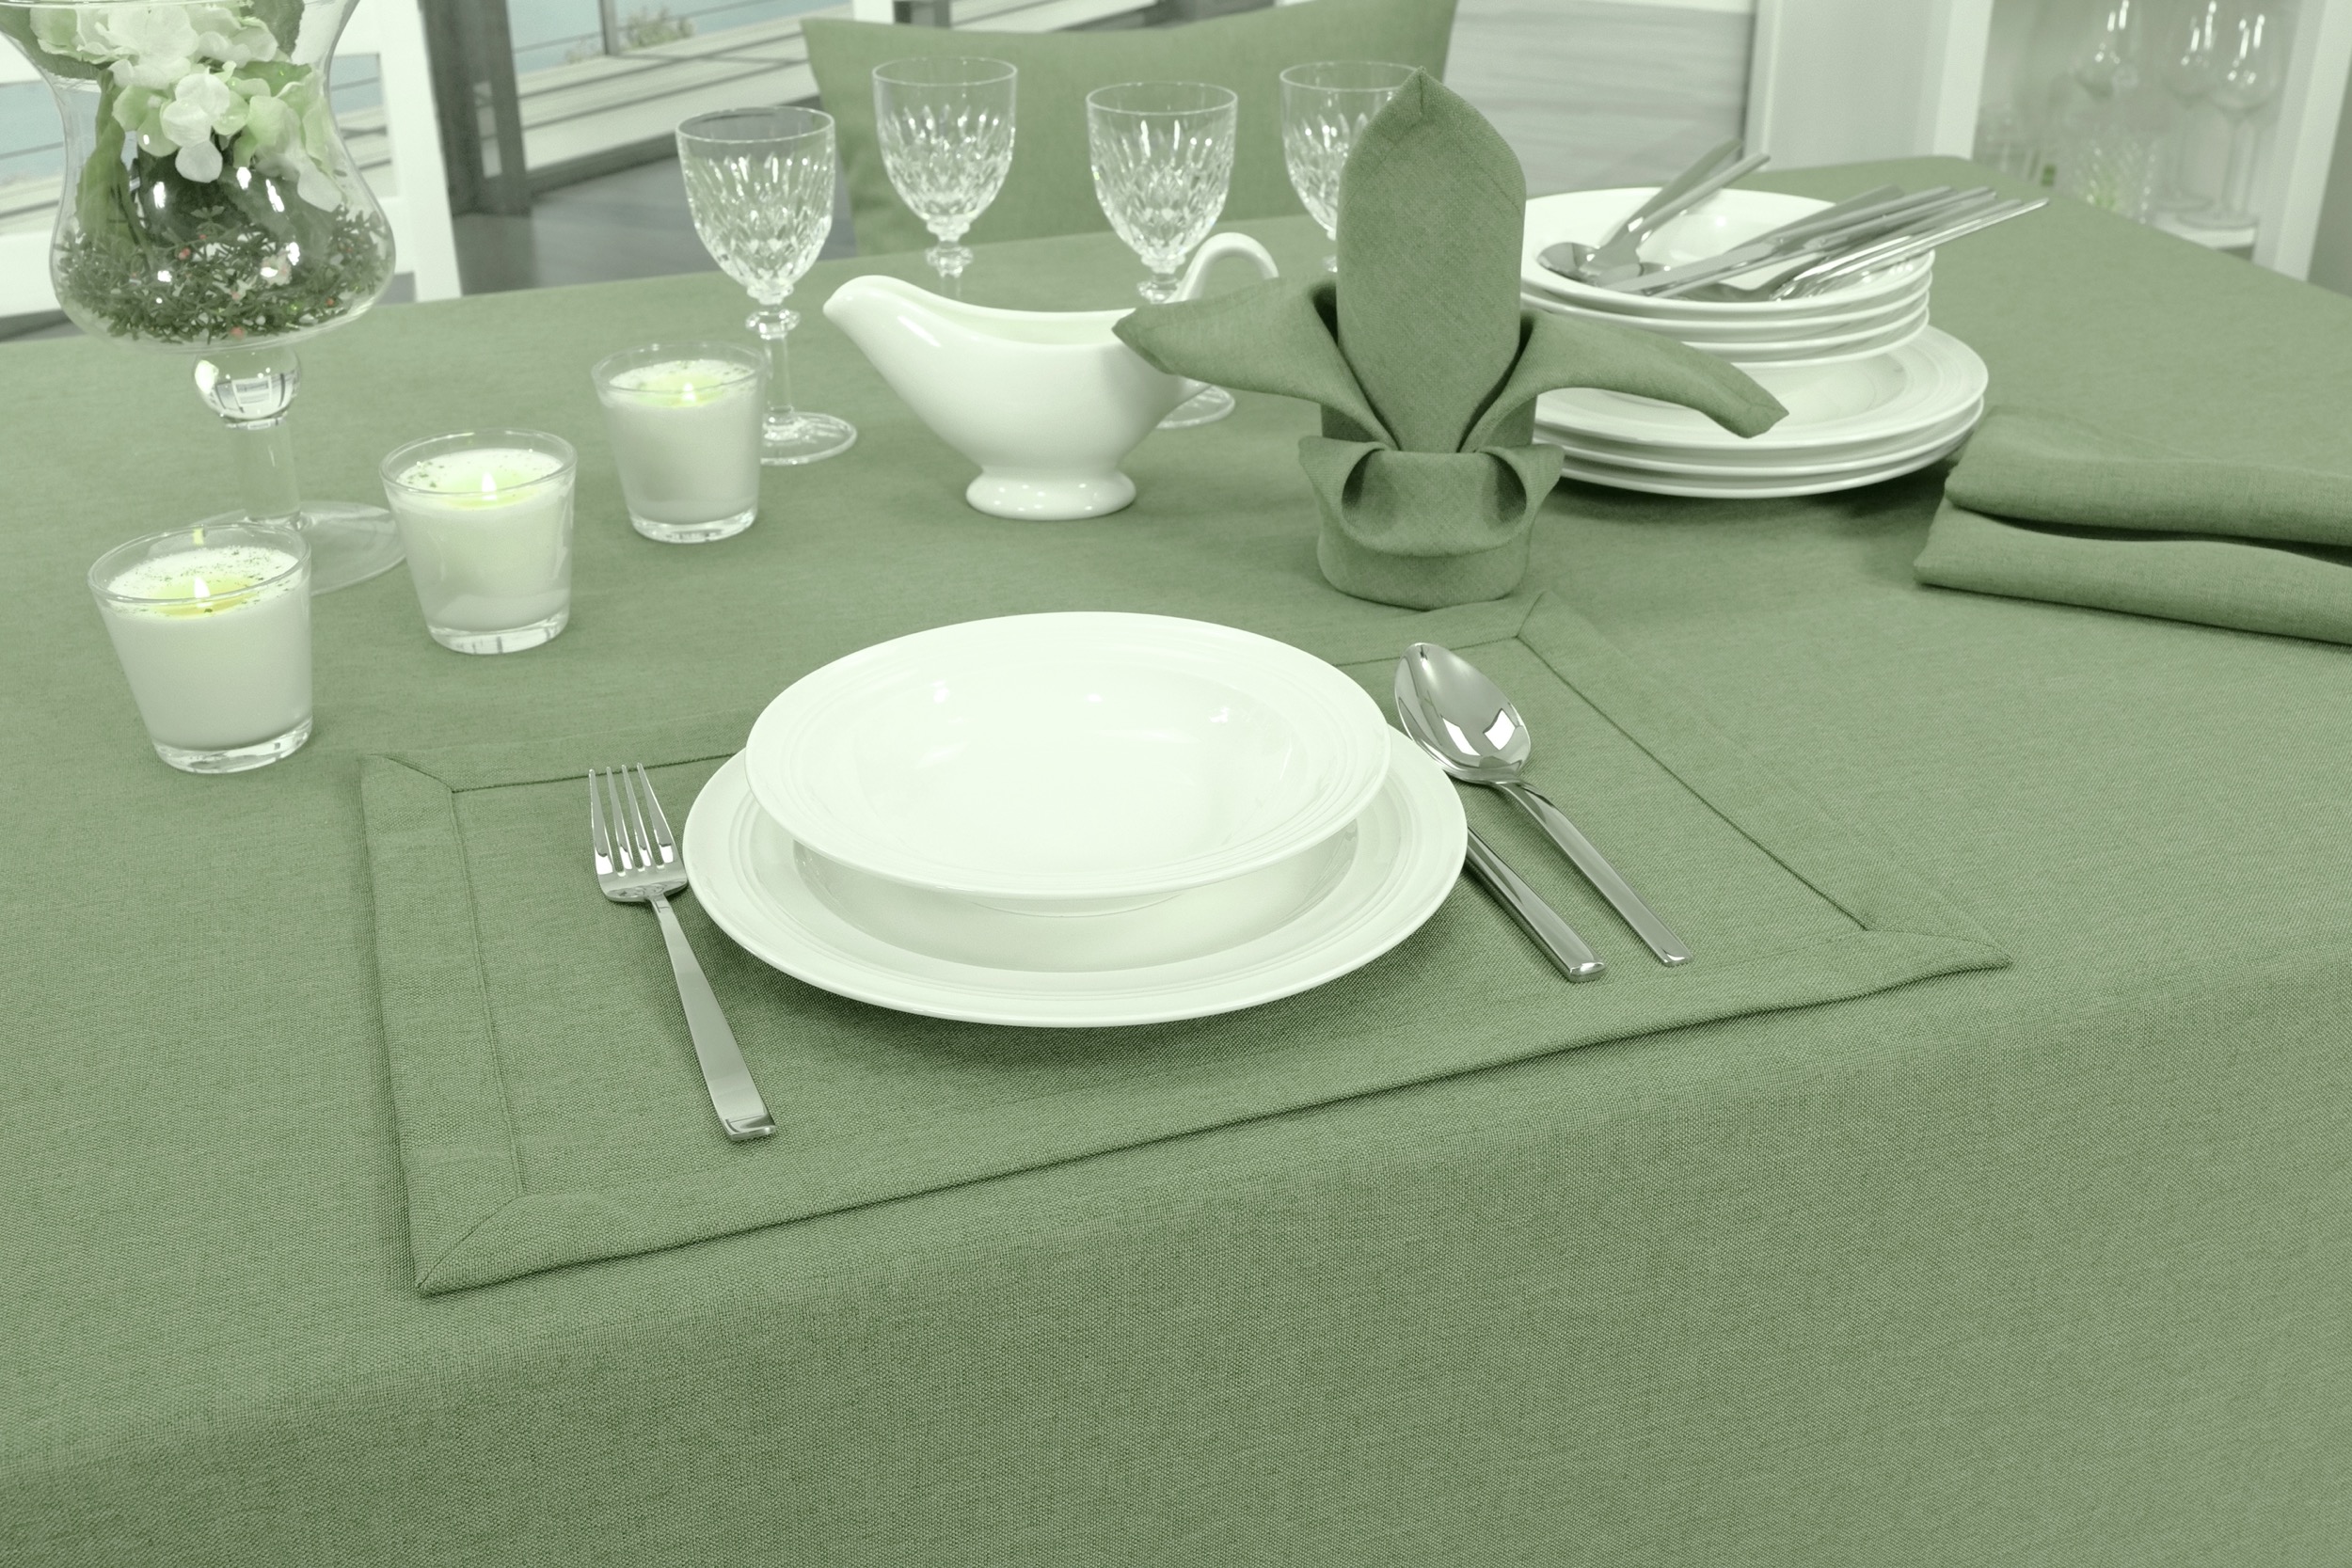 Edle Tischdecke Grün einfarbig Peony | cm 120 Breite SW132844 100 cm 